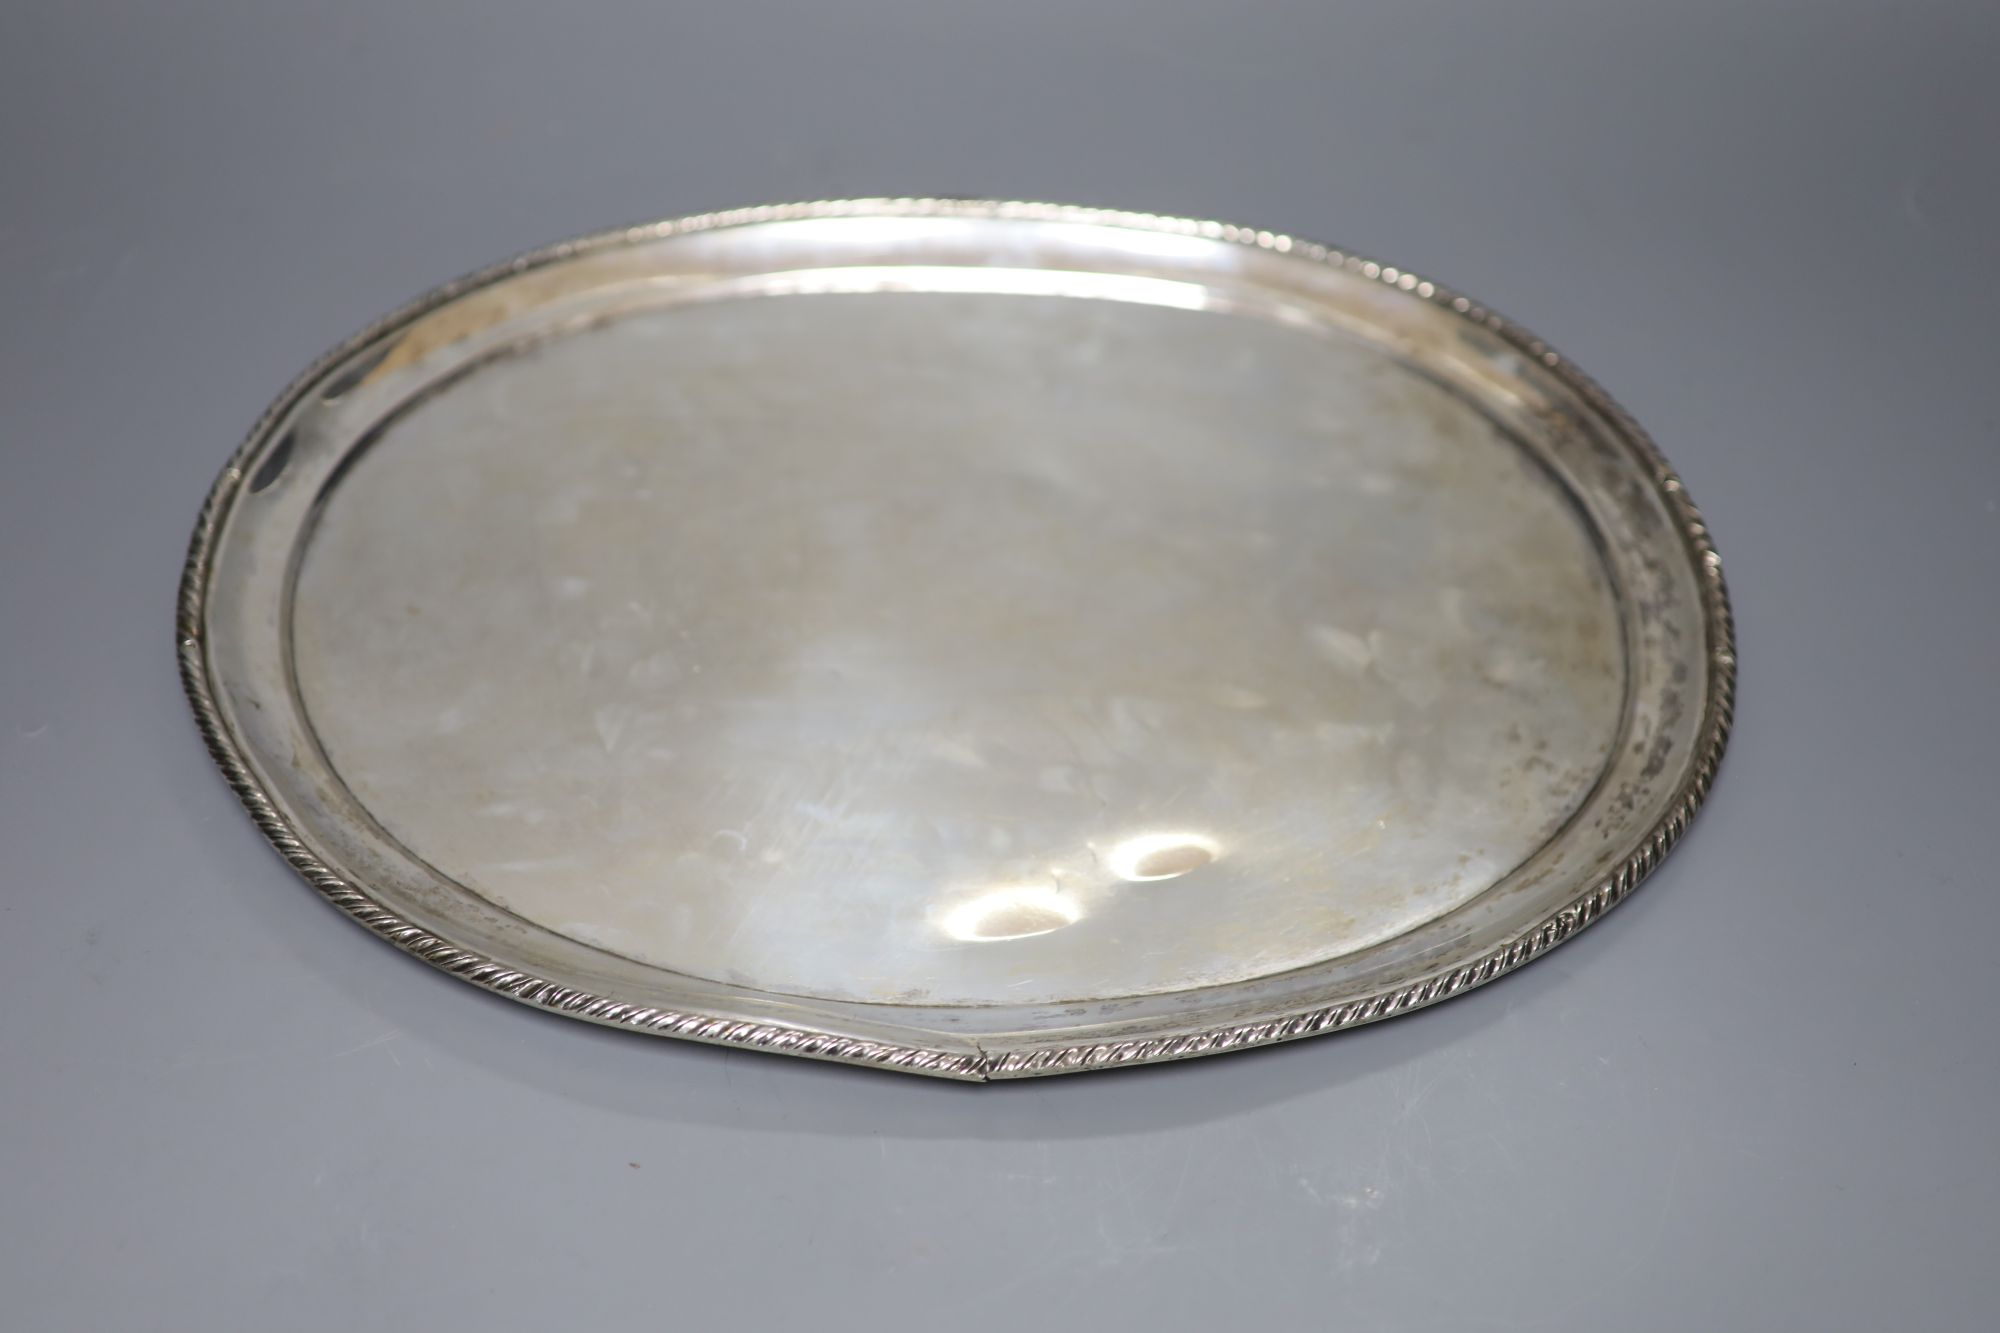 An Italian white metal oval tray with ropetwist edge, 30.5oz